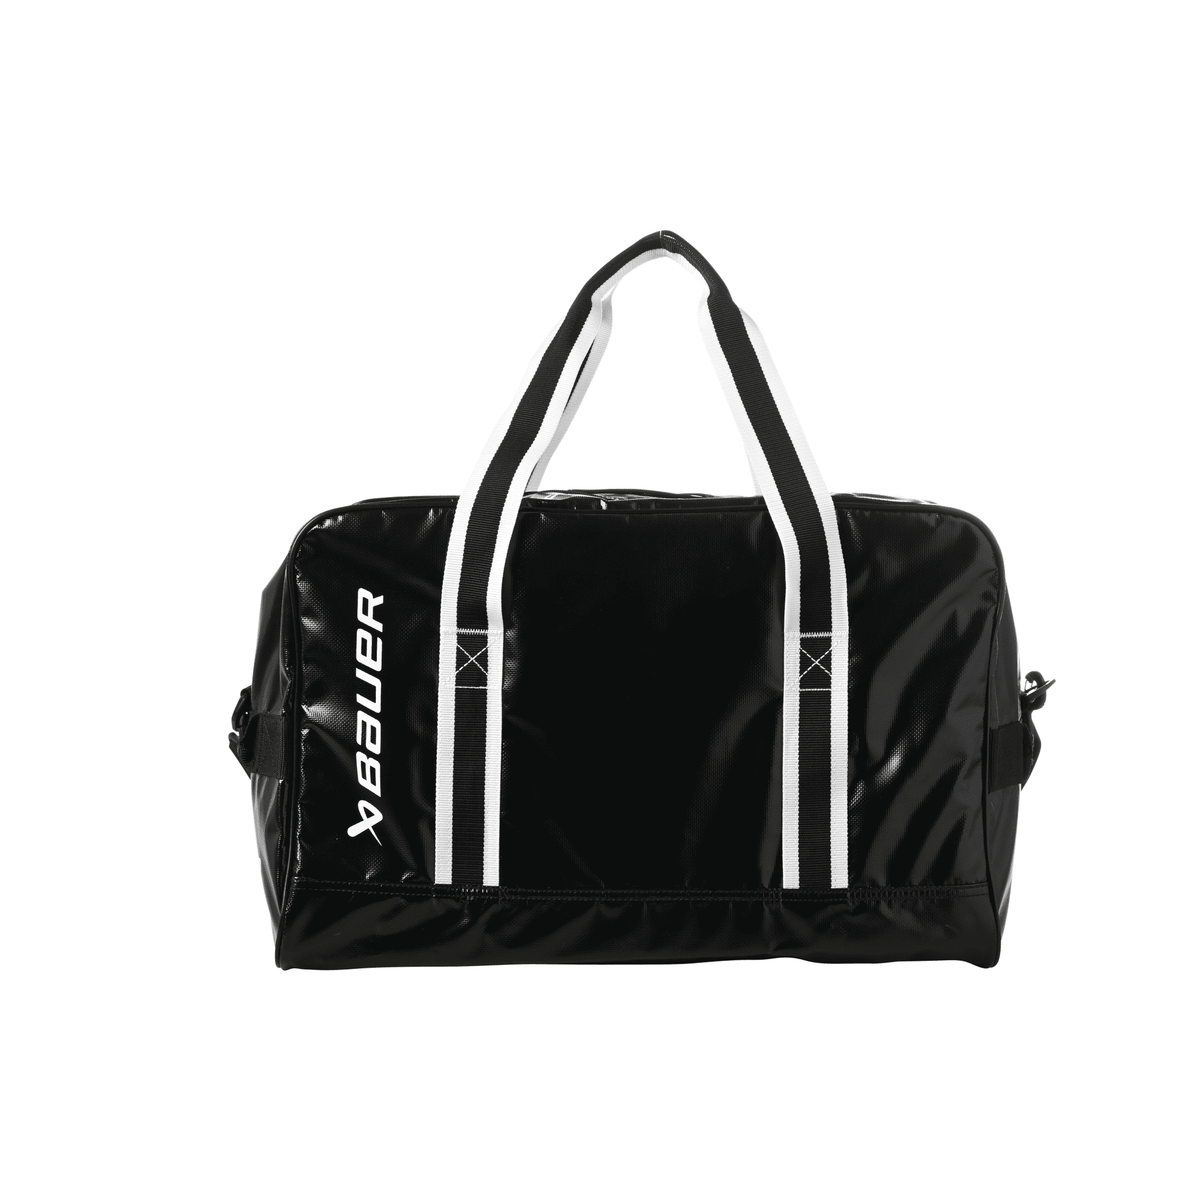 Bauer Pro Duffle Bag